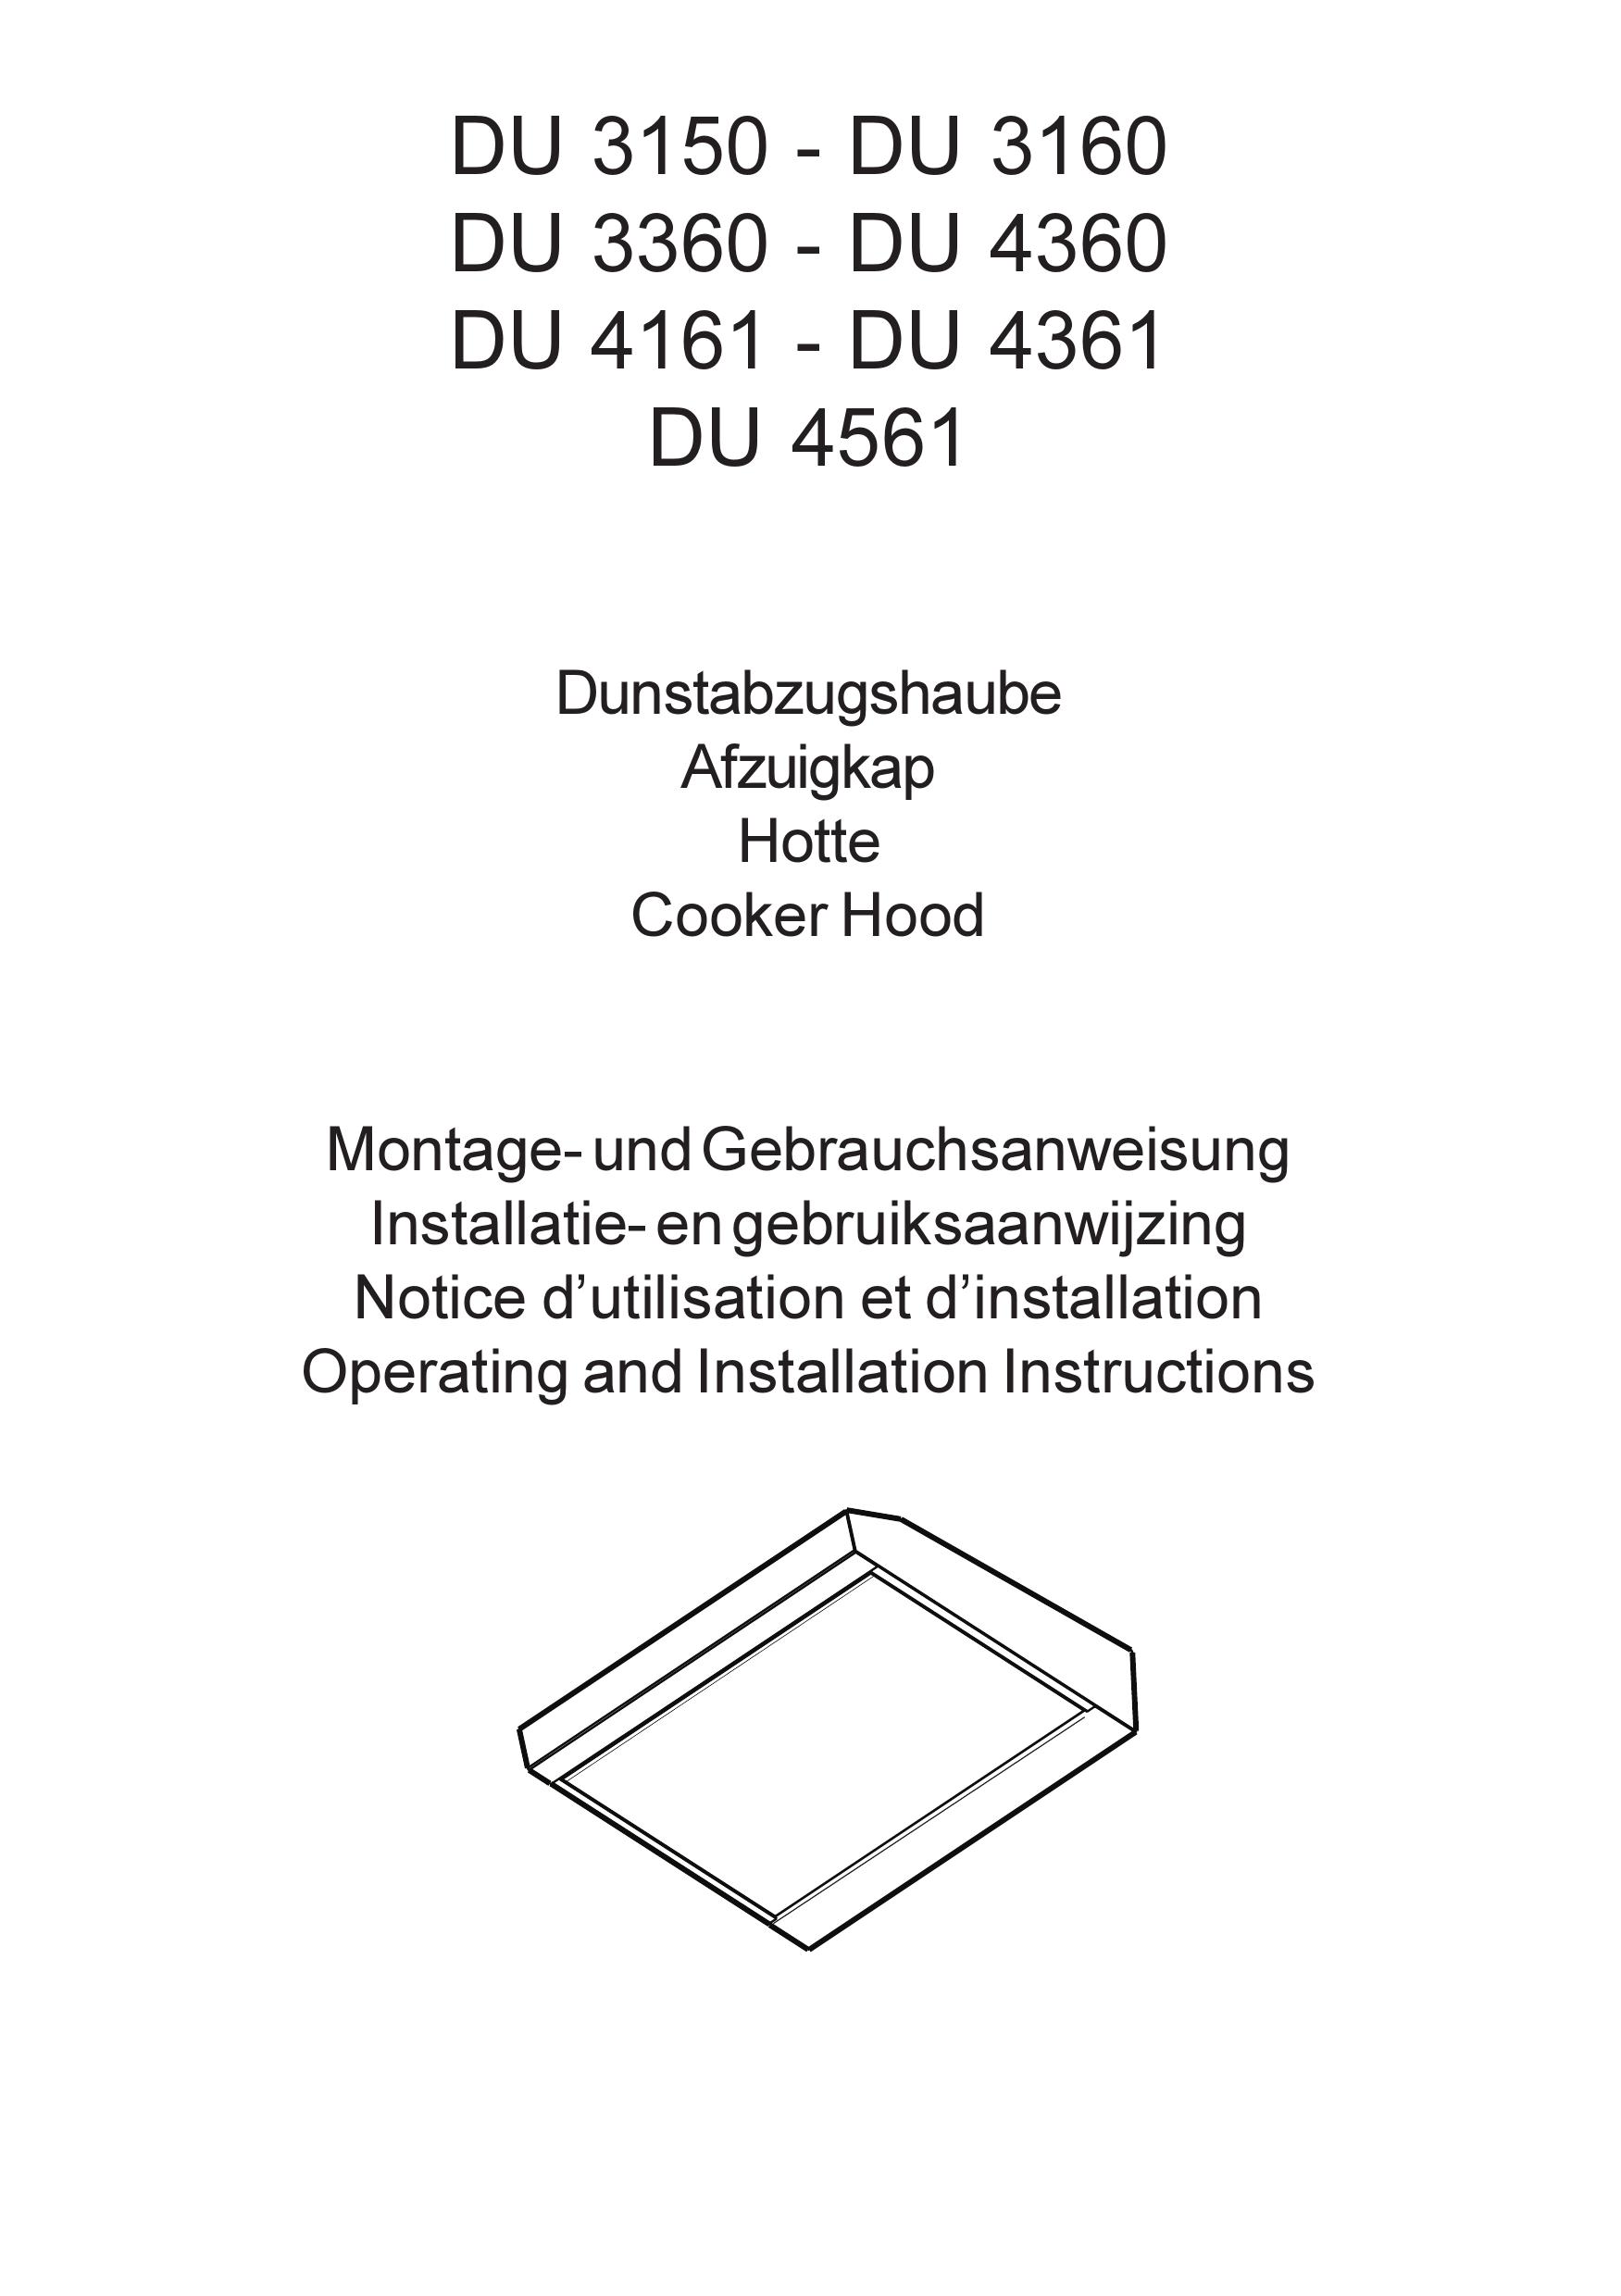 AEG DU 4361 Ventilation Hood User Manual